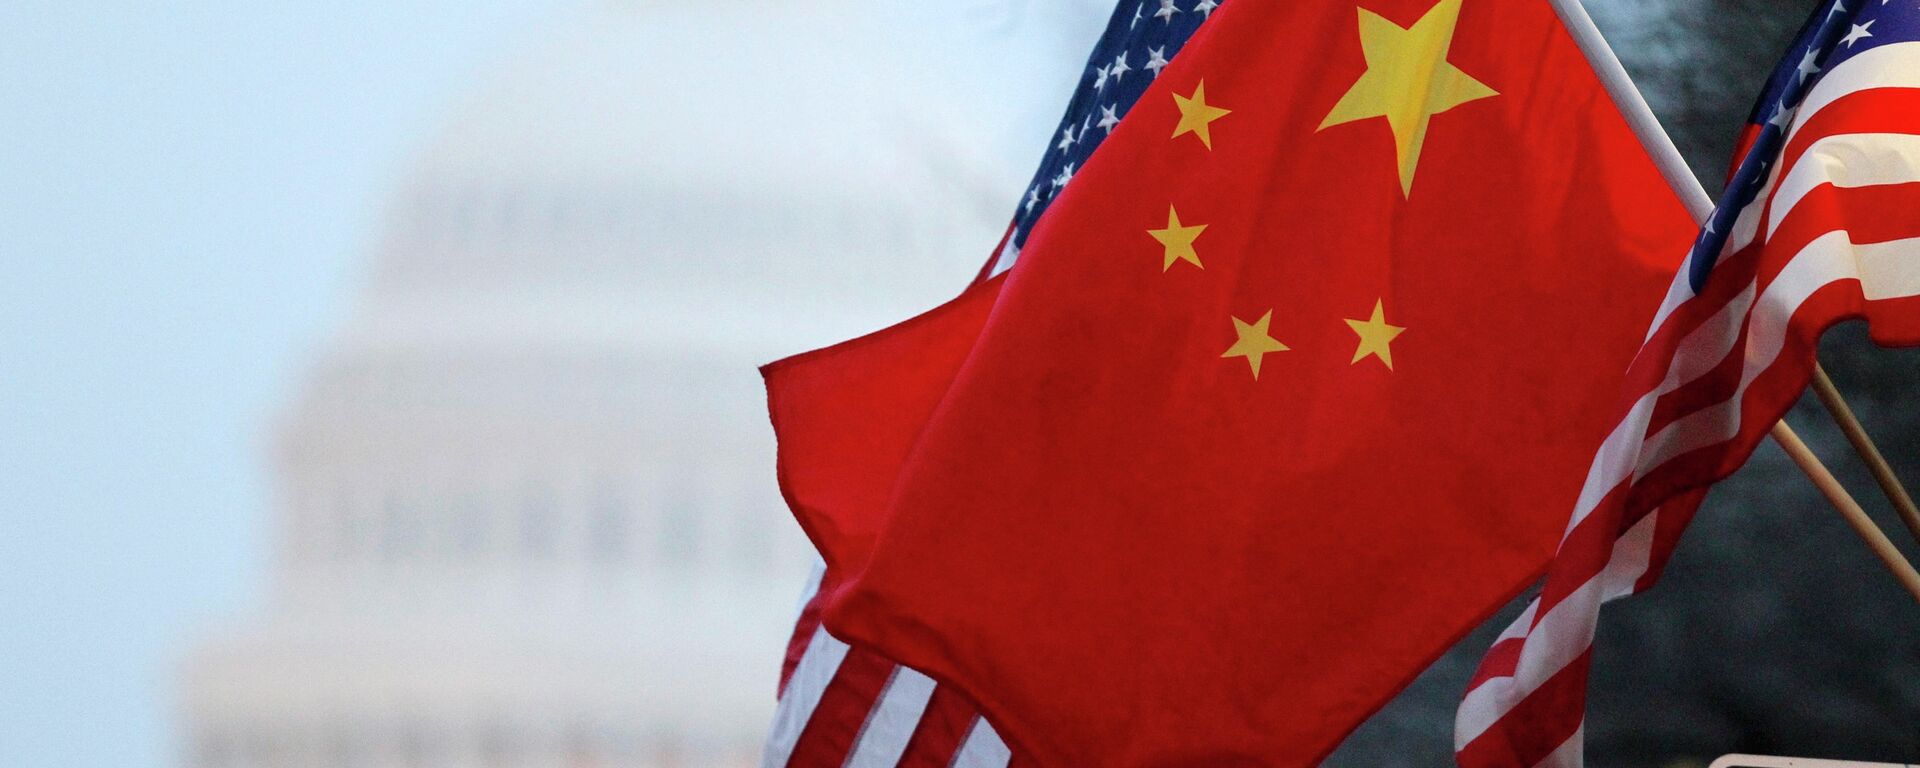 The People's Republic of China flag and the U.S. Stars and Stripes fly along Pennsylvania Avenue near the U.S. Capitol in Washington - Sputnik Mundo, 1920, 02.02.2021